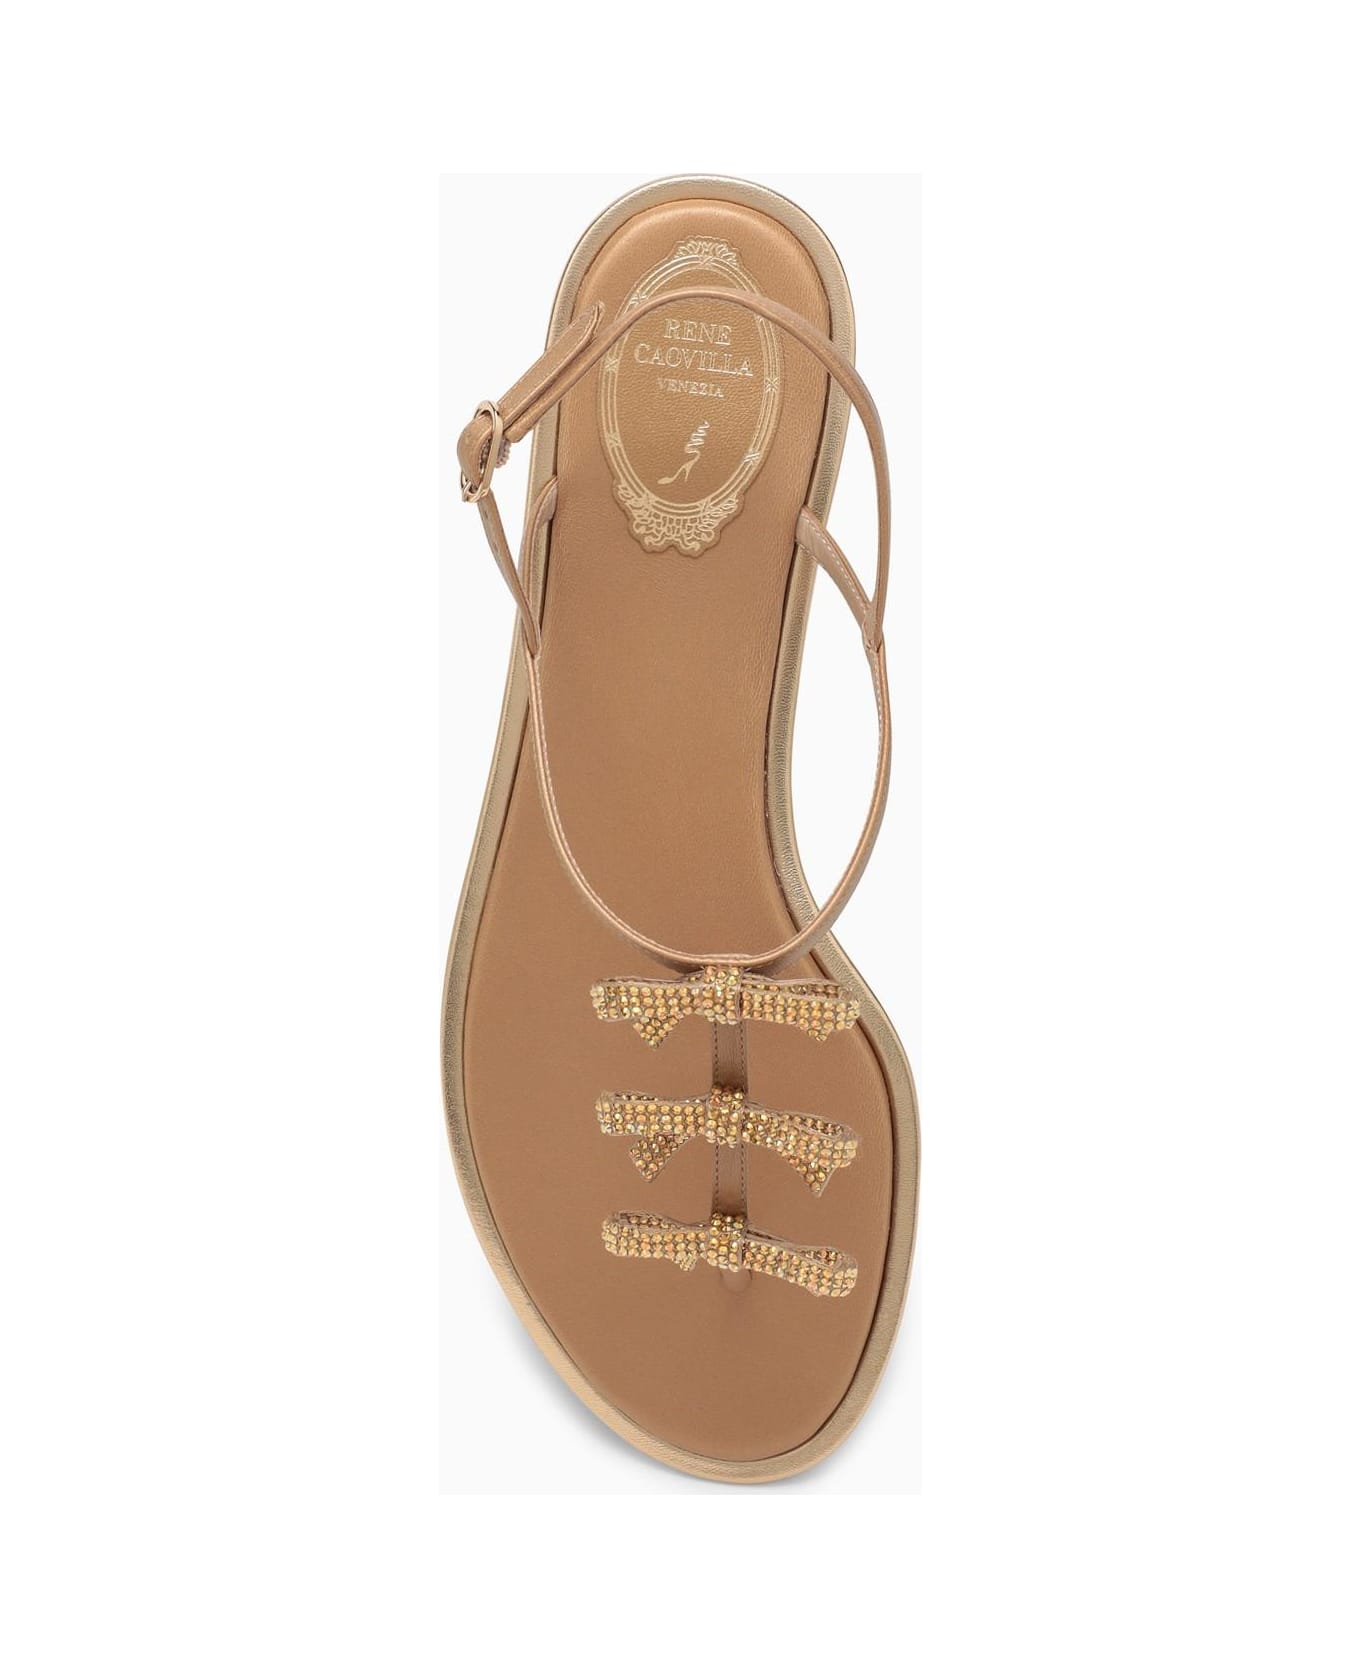 René Caovilla Golden Leather Sandal With Bows - Golden